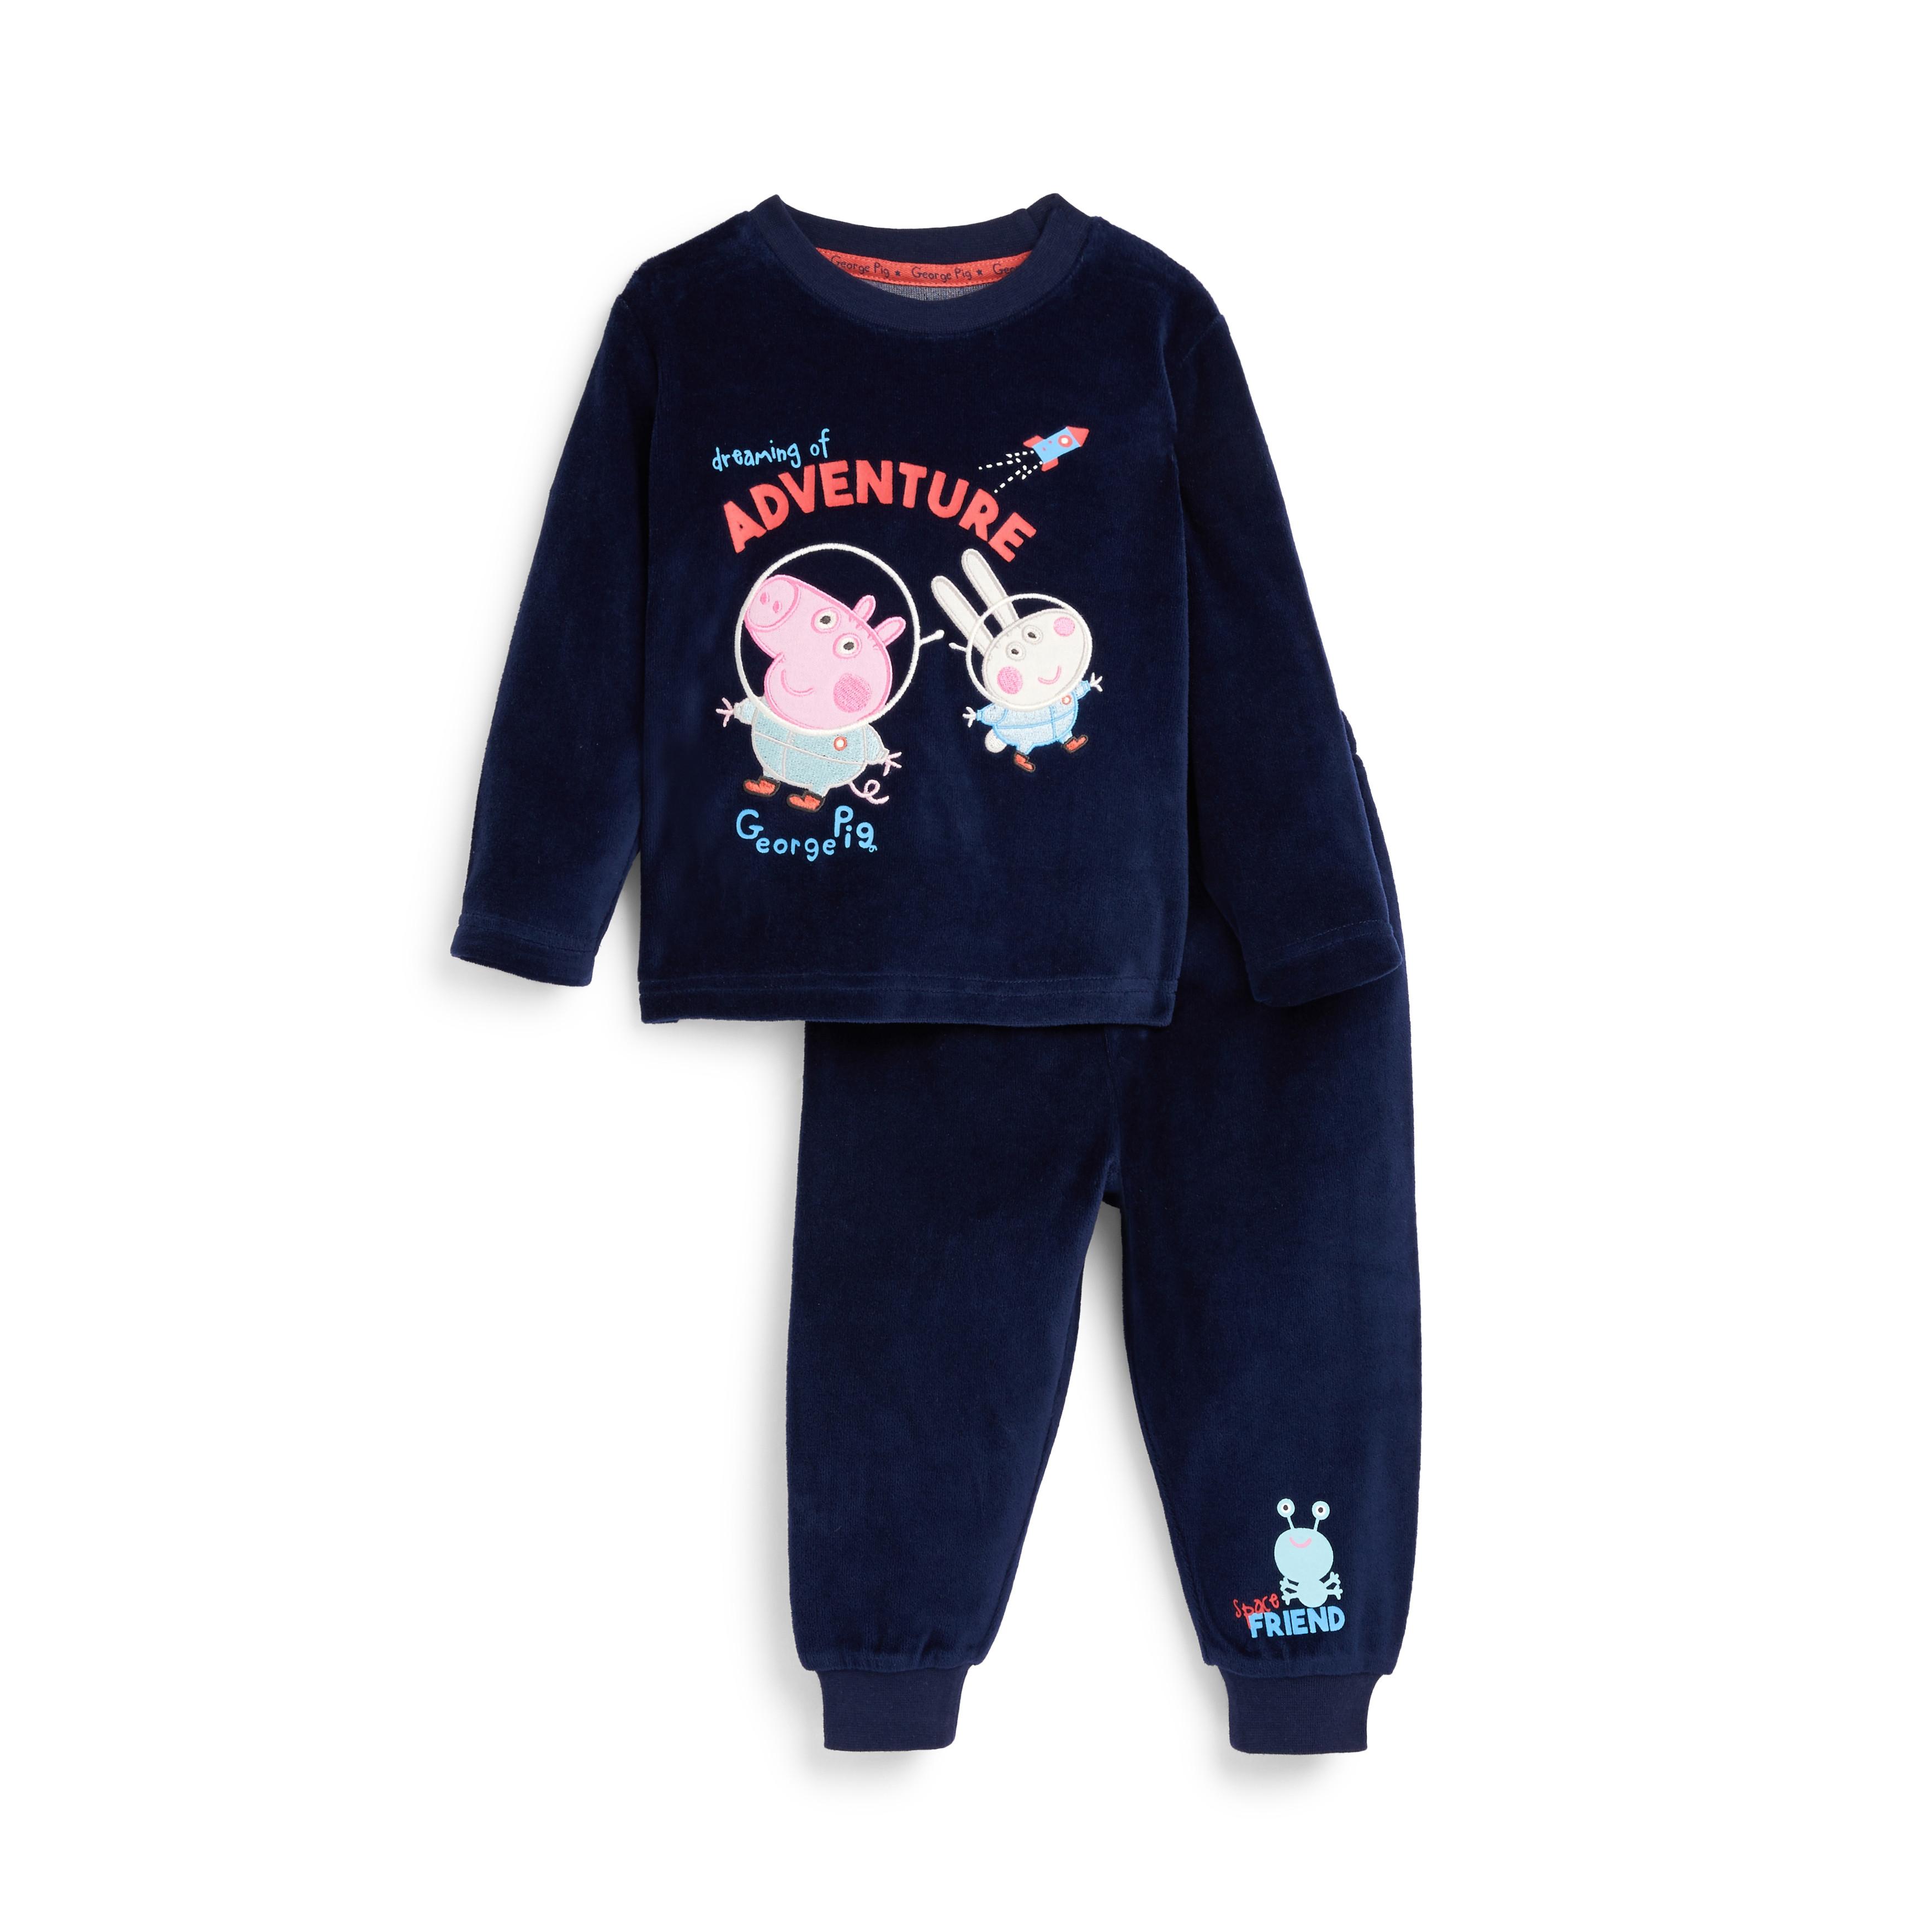 Pijama azul marino de velvetón de George de Peppa Pig para bebé niño | Básicos de moda para bebé Moda para bebés y nacidos | Ropa para niños | Todos